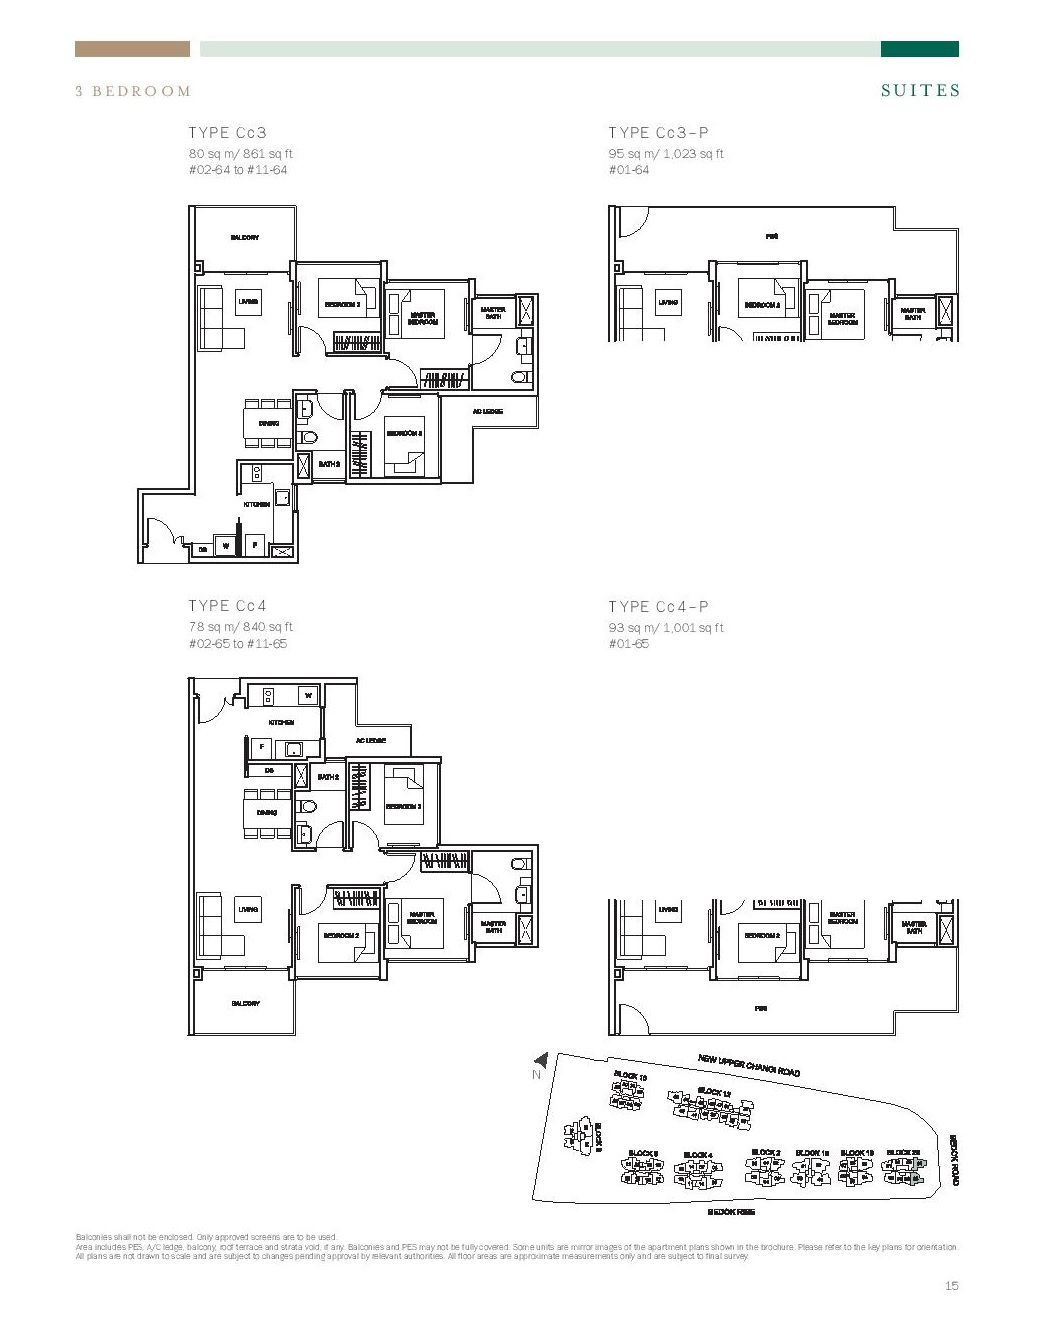 The Glades @ Tanah Merah 3 Bedroom Floor Type Cc1. Cc2, Cc1-P, Cc2-P Plans